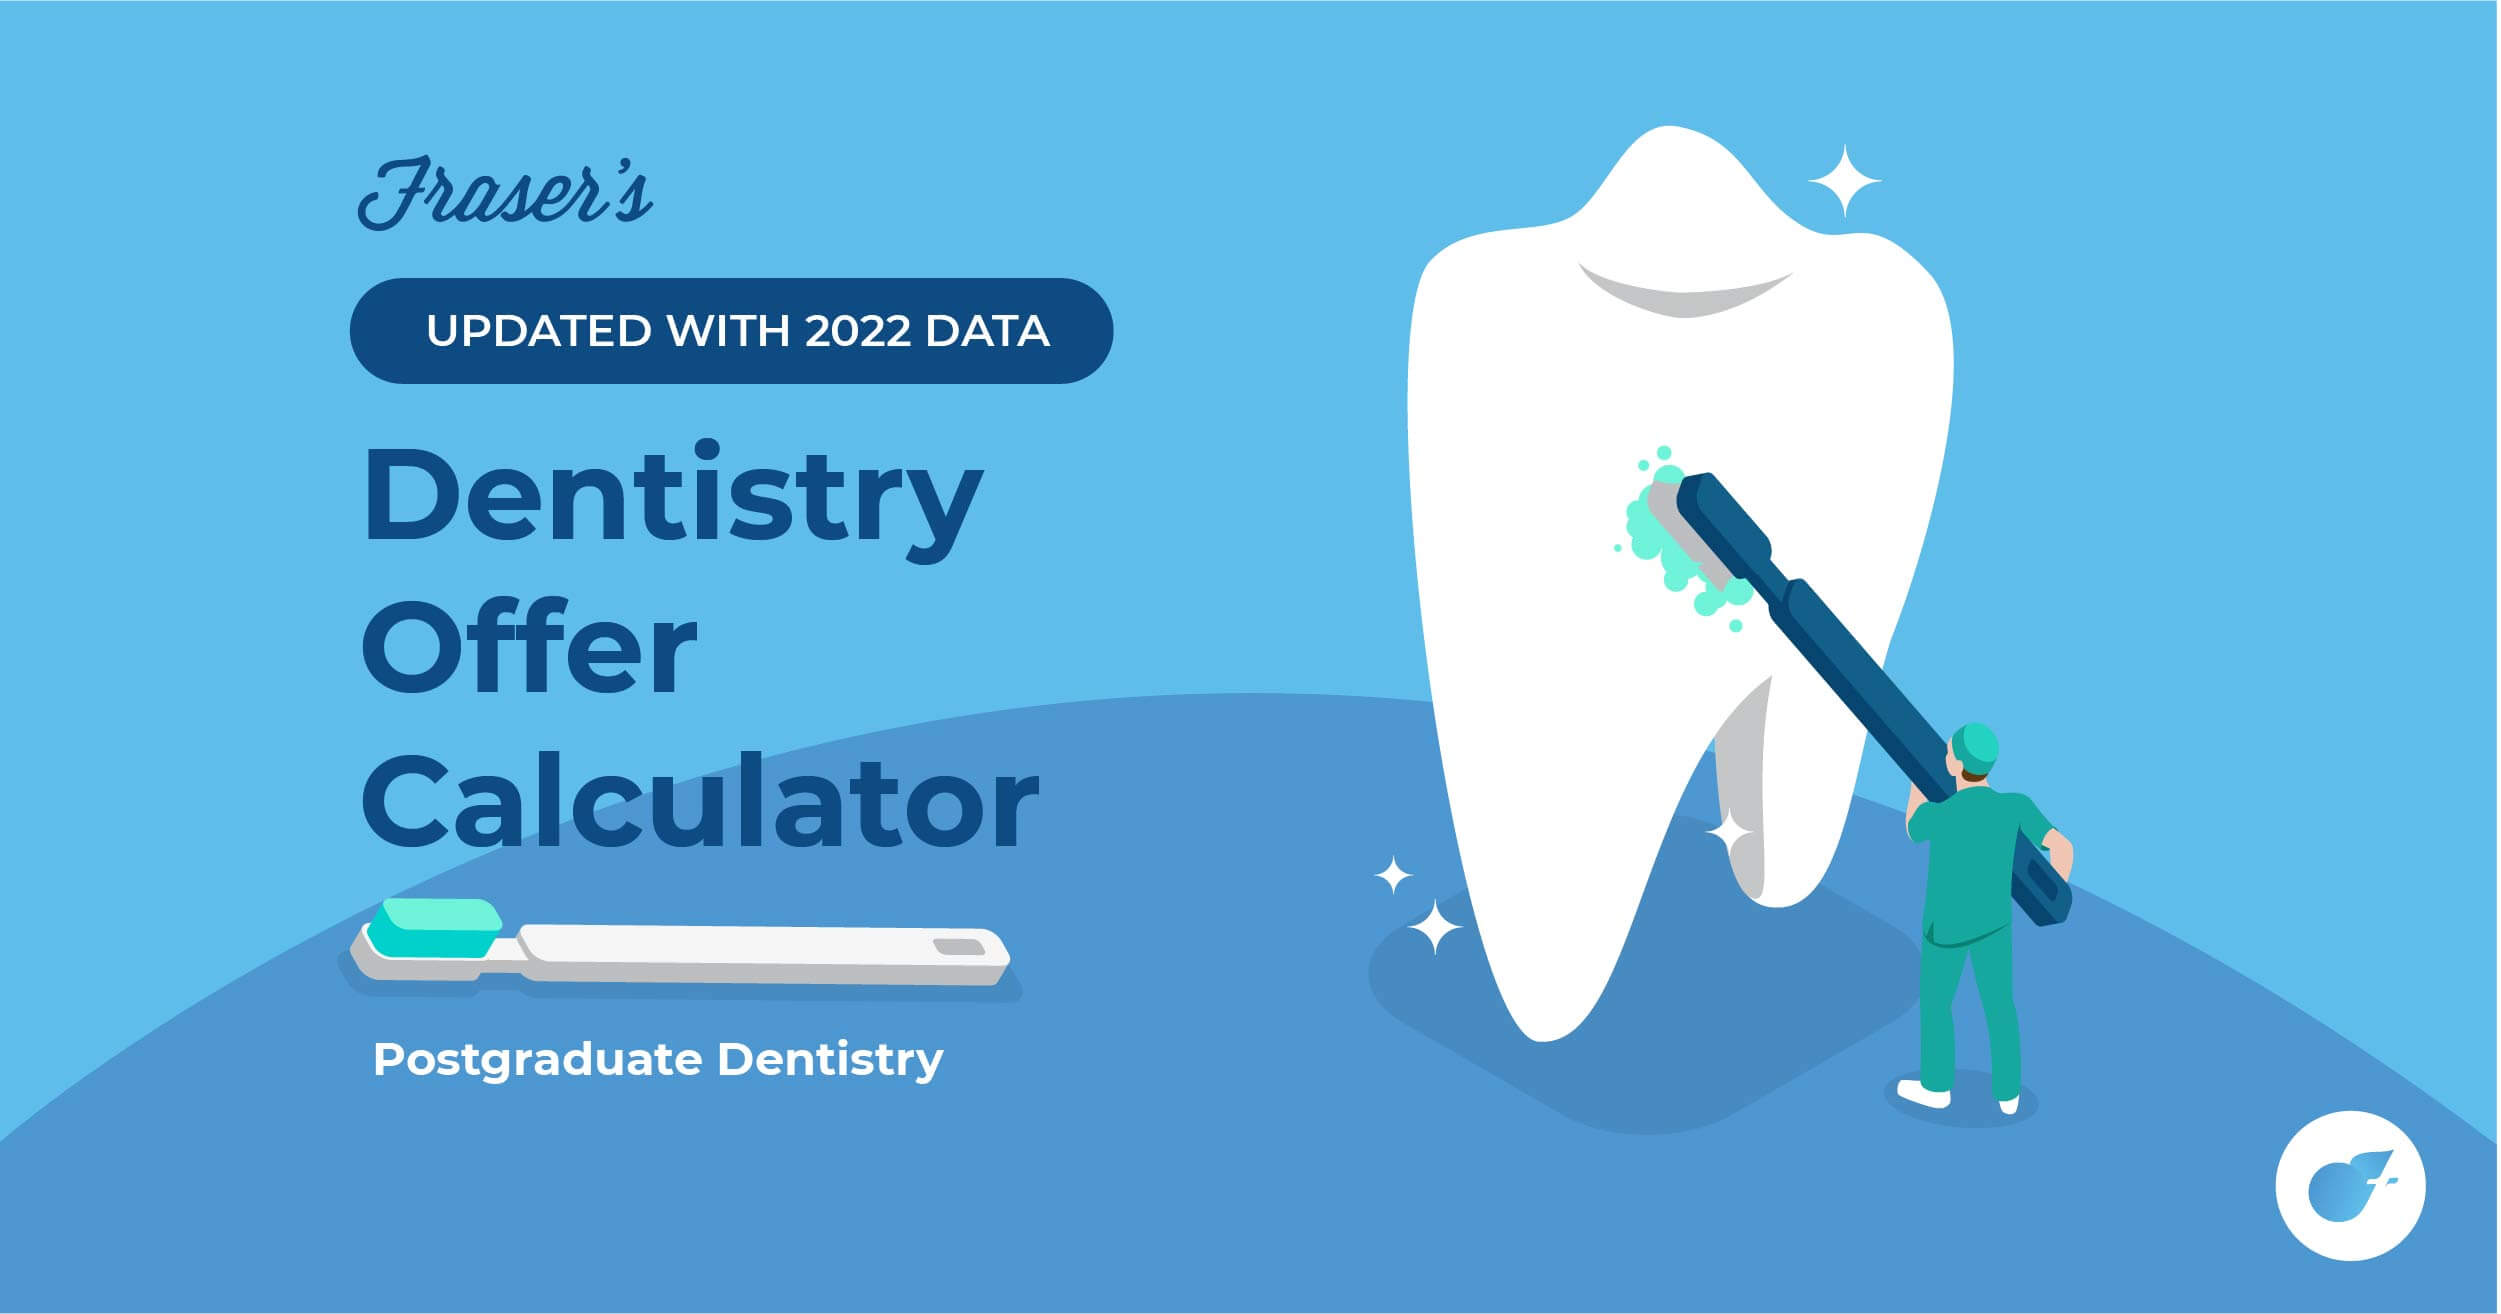 Postgraduate Dentistry Offer Calculator featured image